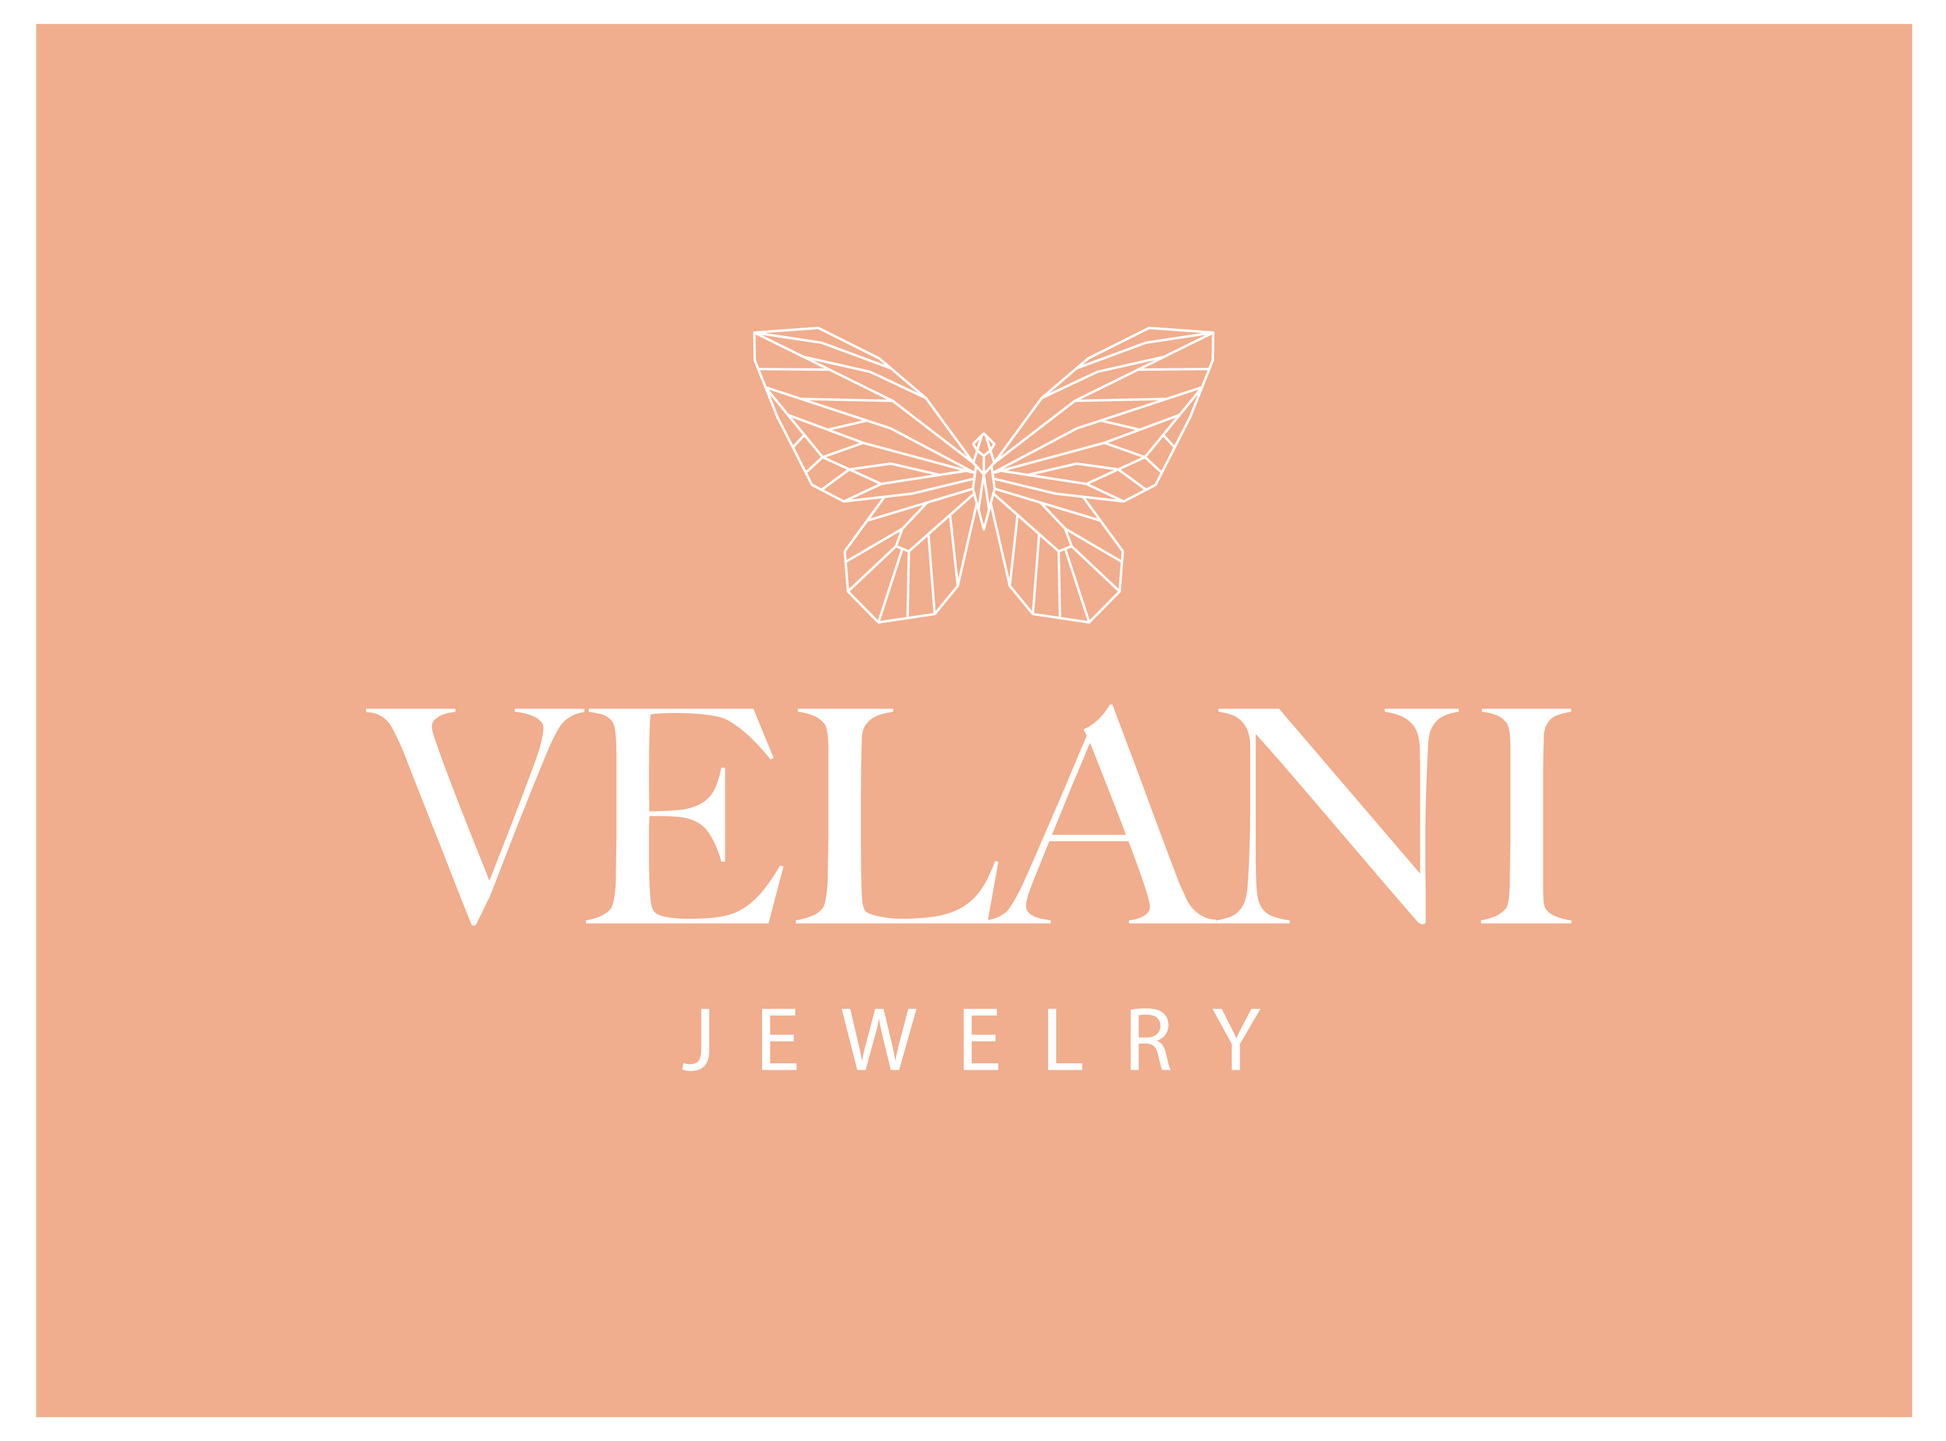 Velani Gift Card